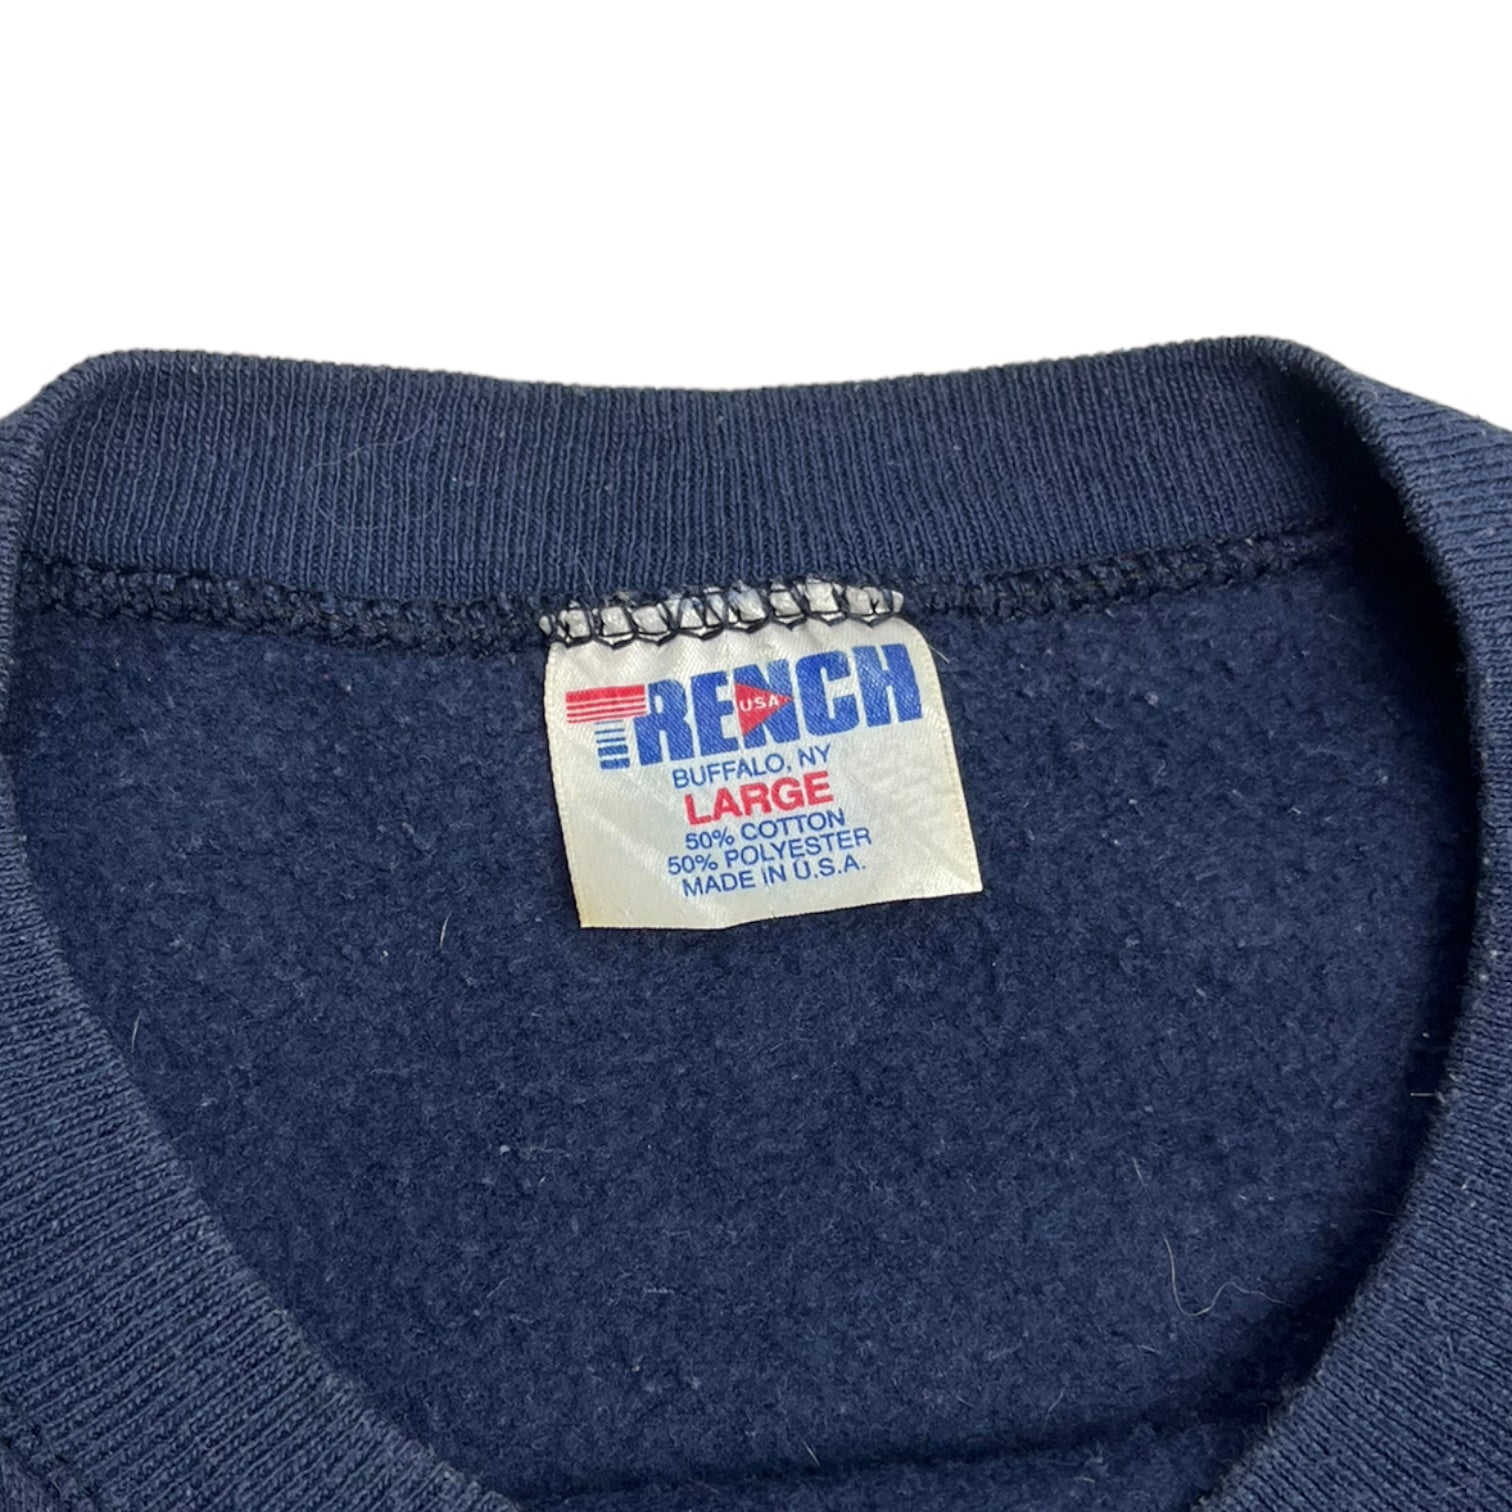 1992 Atlanta Braves Champions Crewneck - Navy Blue Vintage Sweatshirt